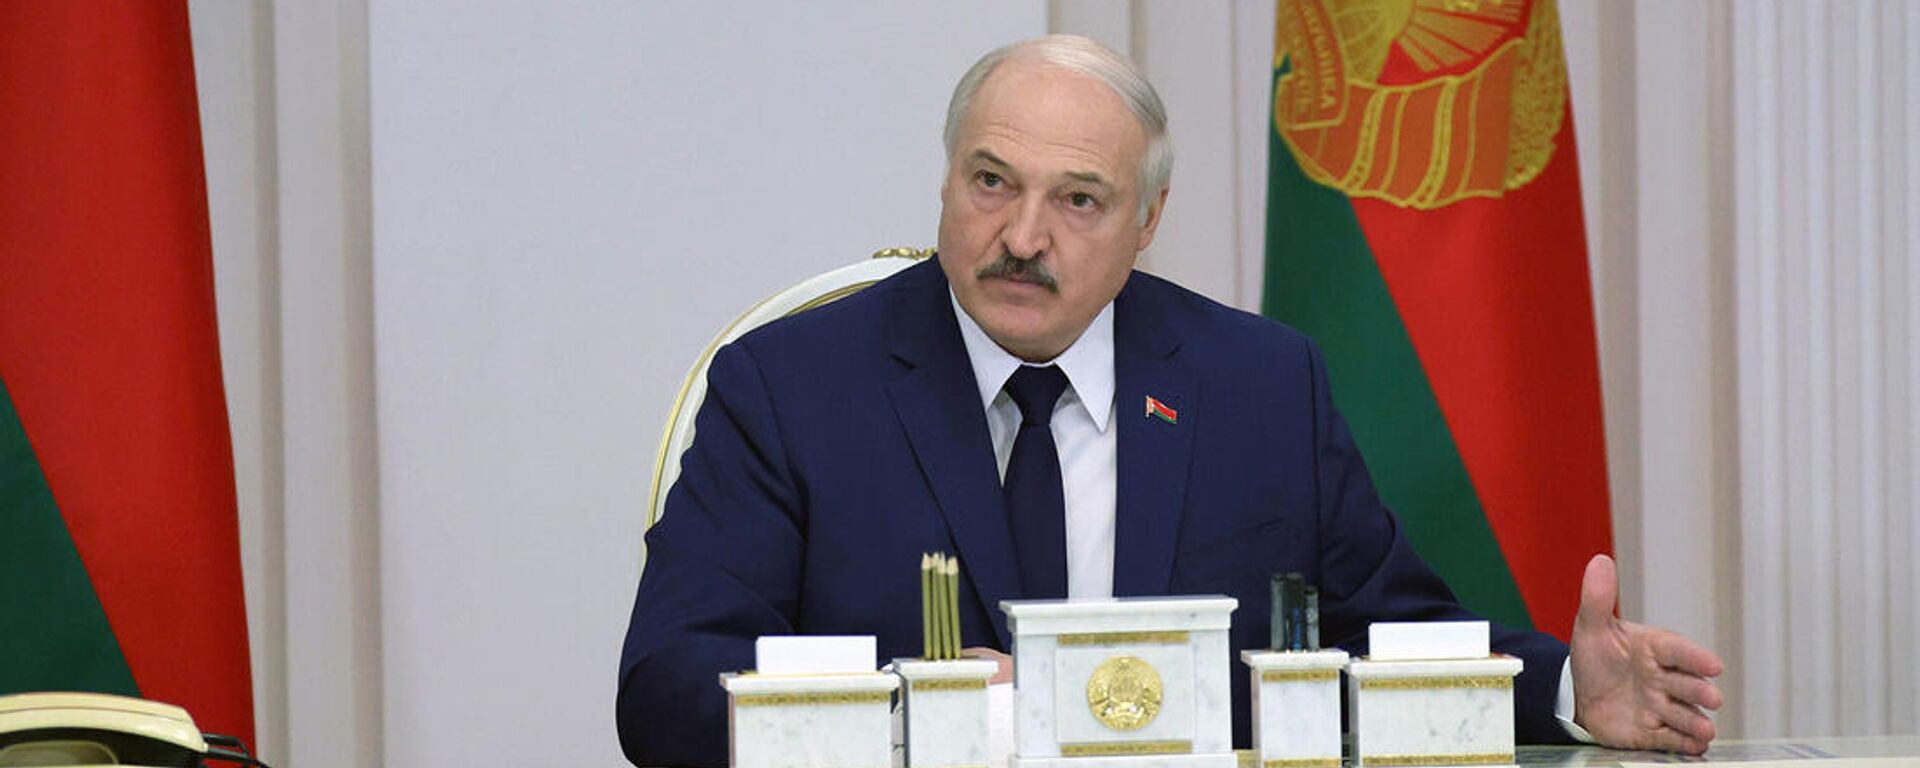 Baltarusijos prezidentas Aleksandras Lukašenka - Sputnik Lietuva, 1920, 22.11.2021